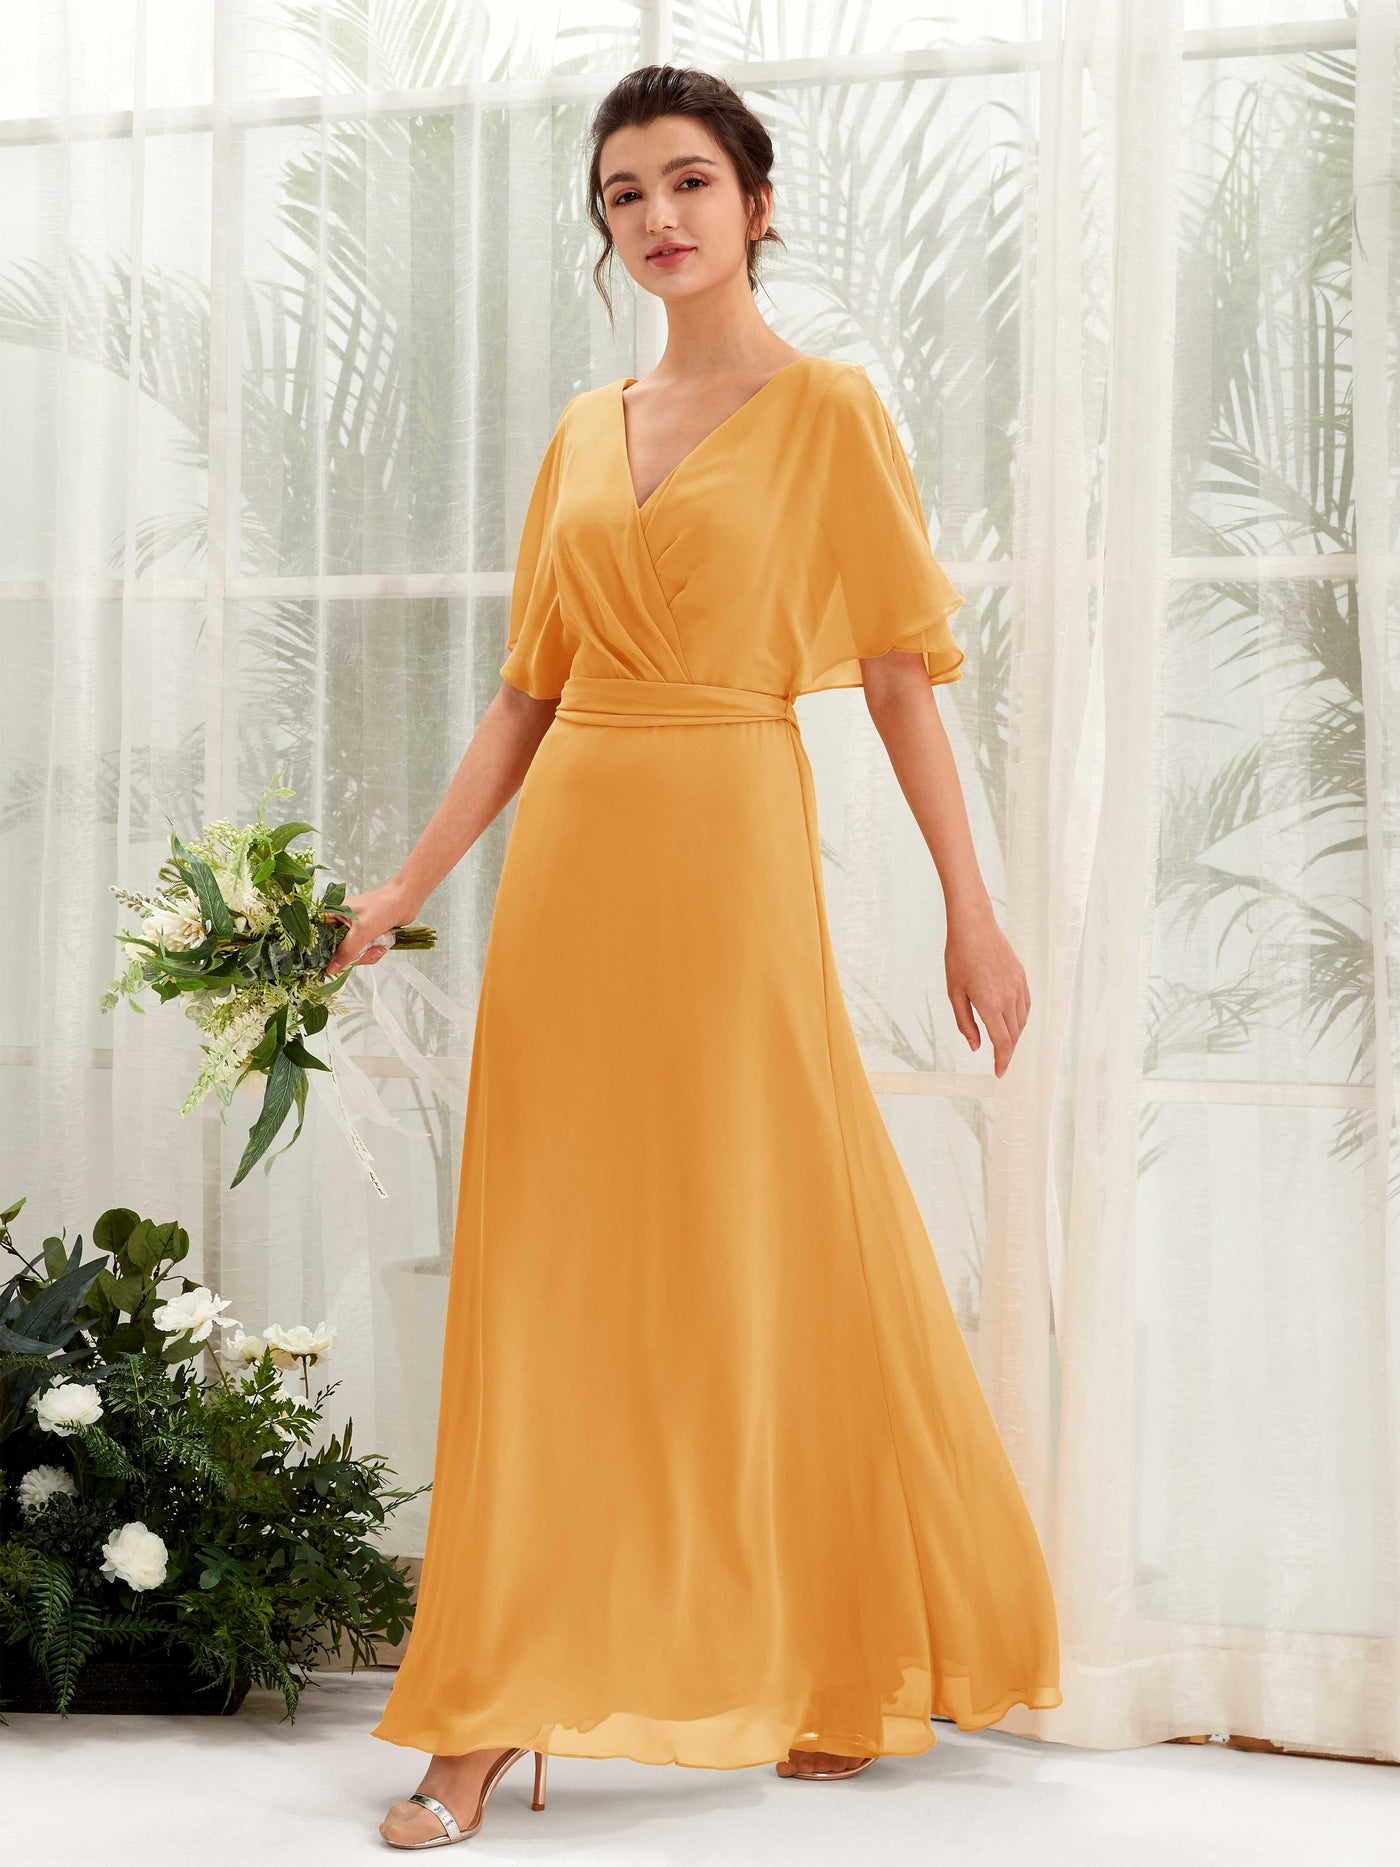 Mango Bridesmaid Dresses Bridesmaid Dress A-line Chiffon V-neck Full Length Short Sleeves Wedding Party Dress (81222402)#color_mango